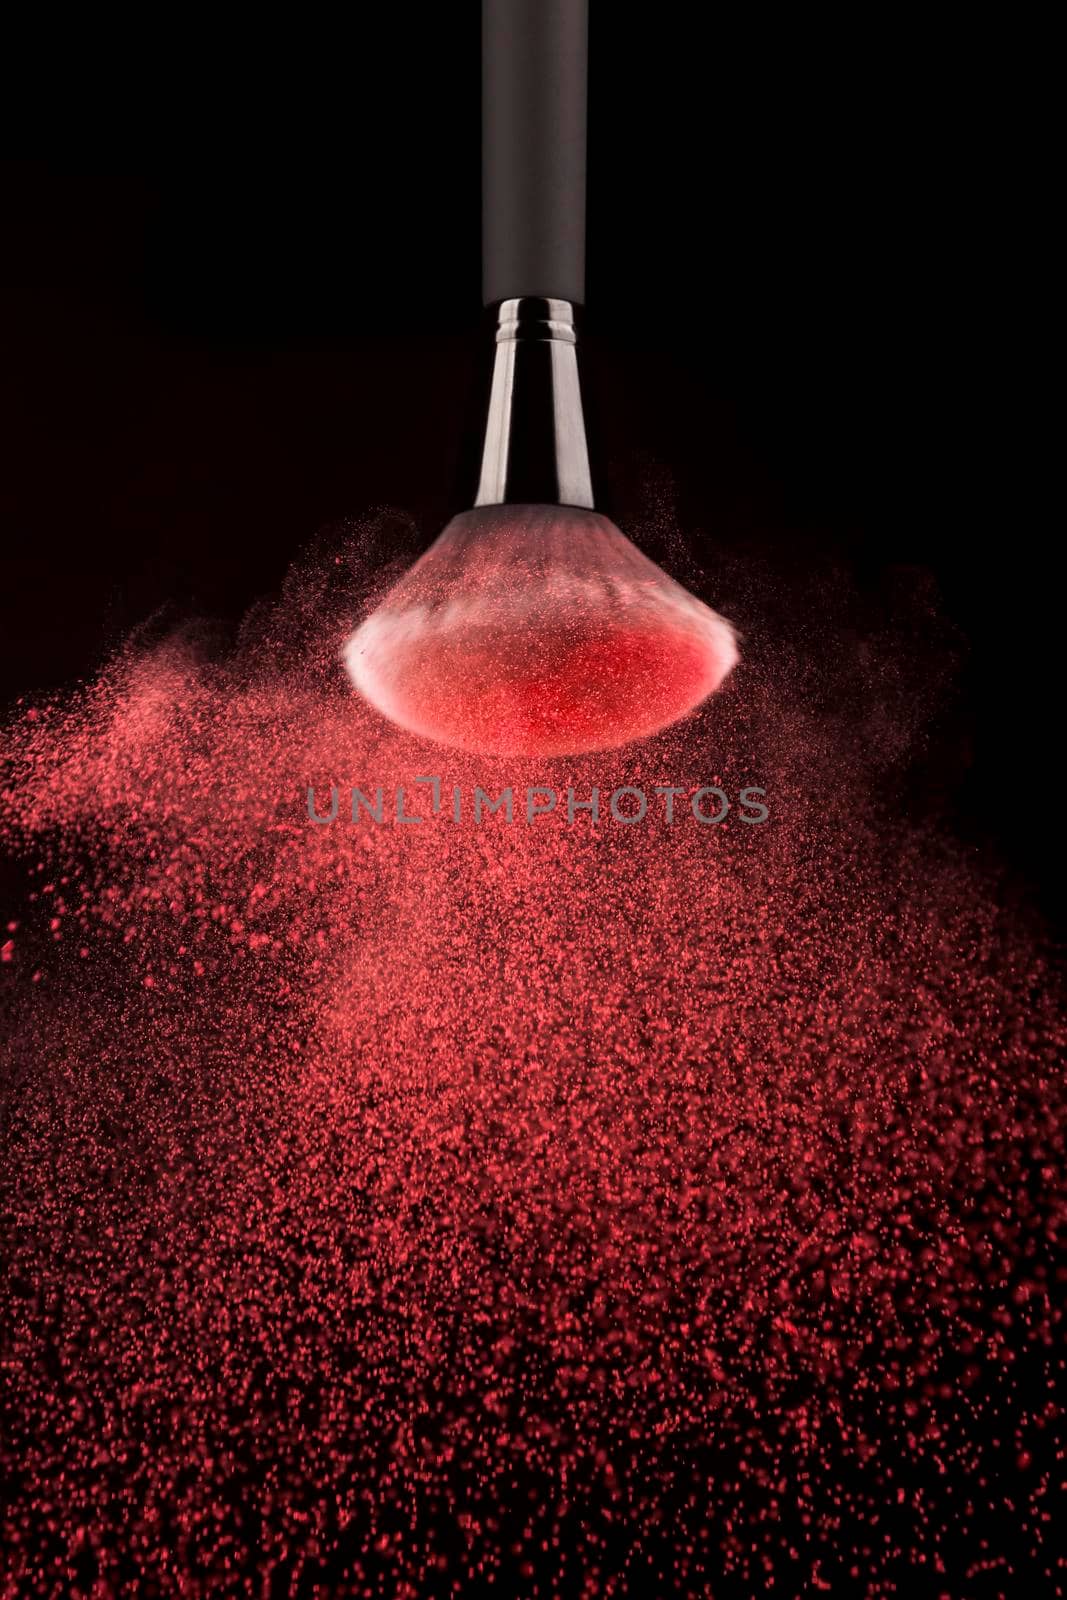 upside down makeup brush red powder splash. High resolution photo